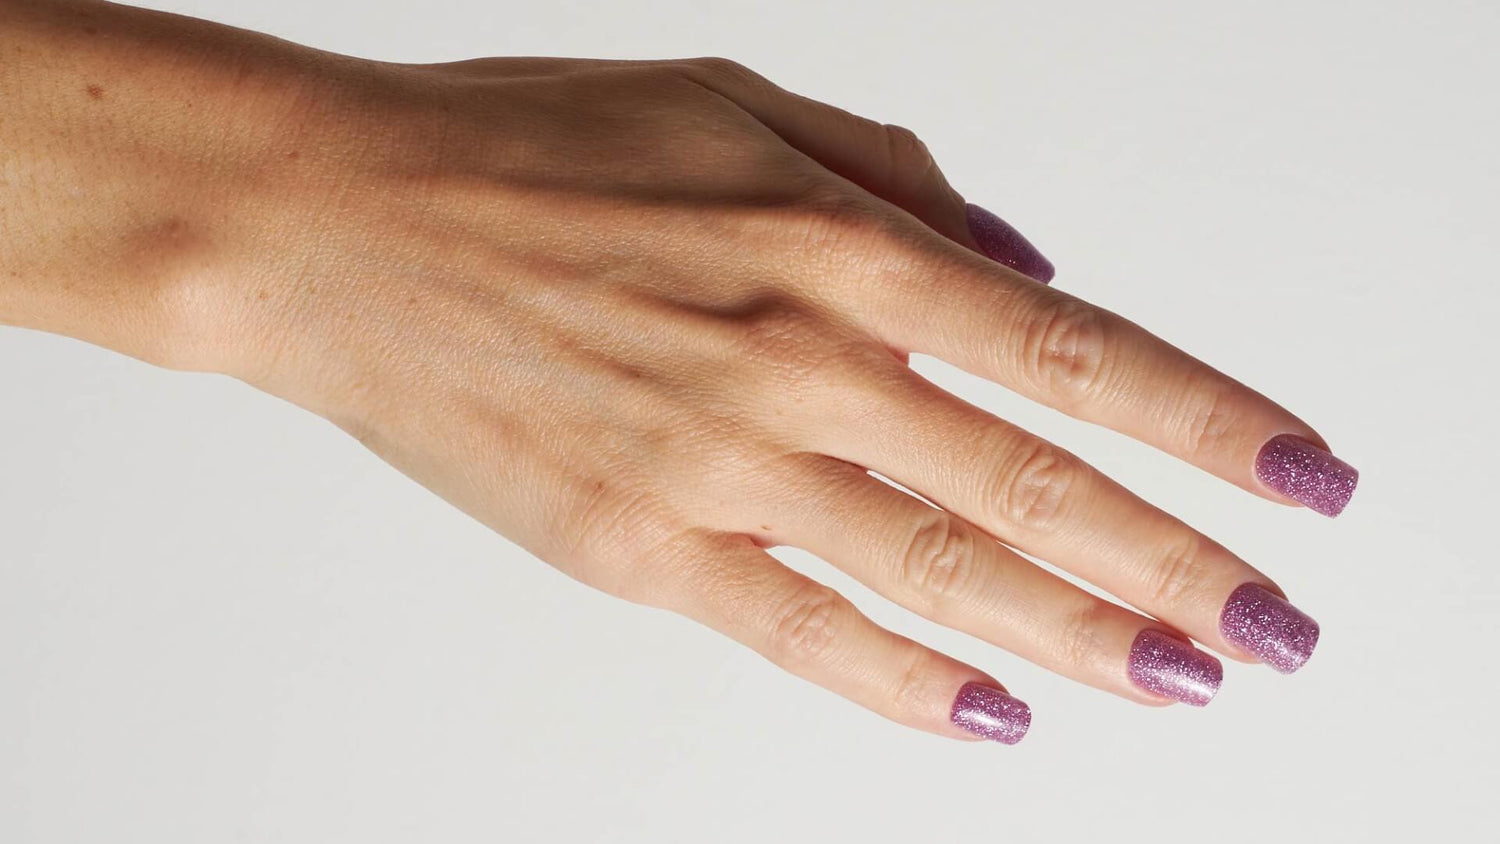 Square Nails: Nail designs for square nails